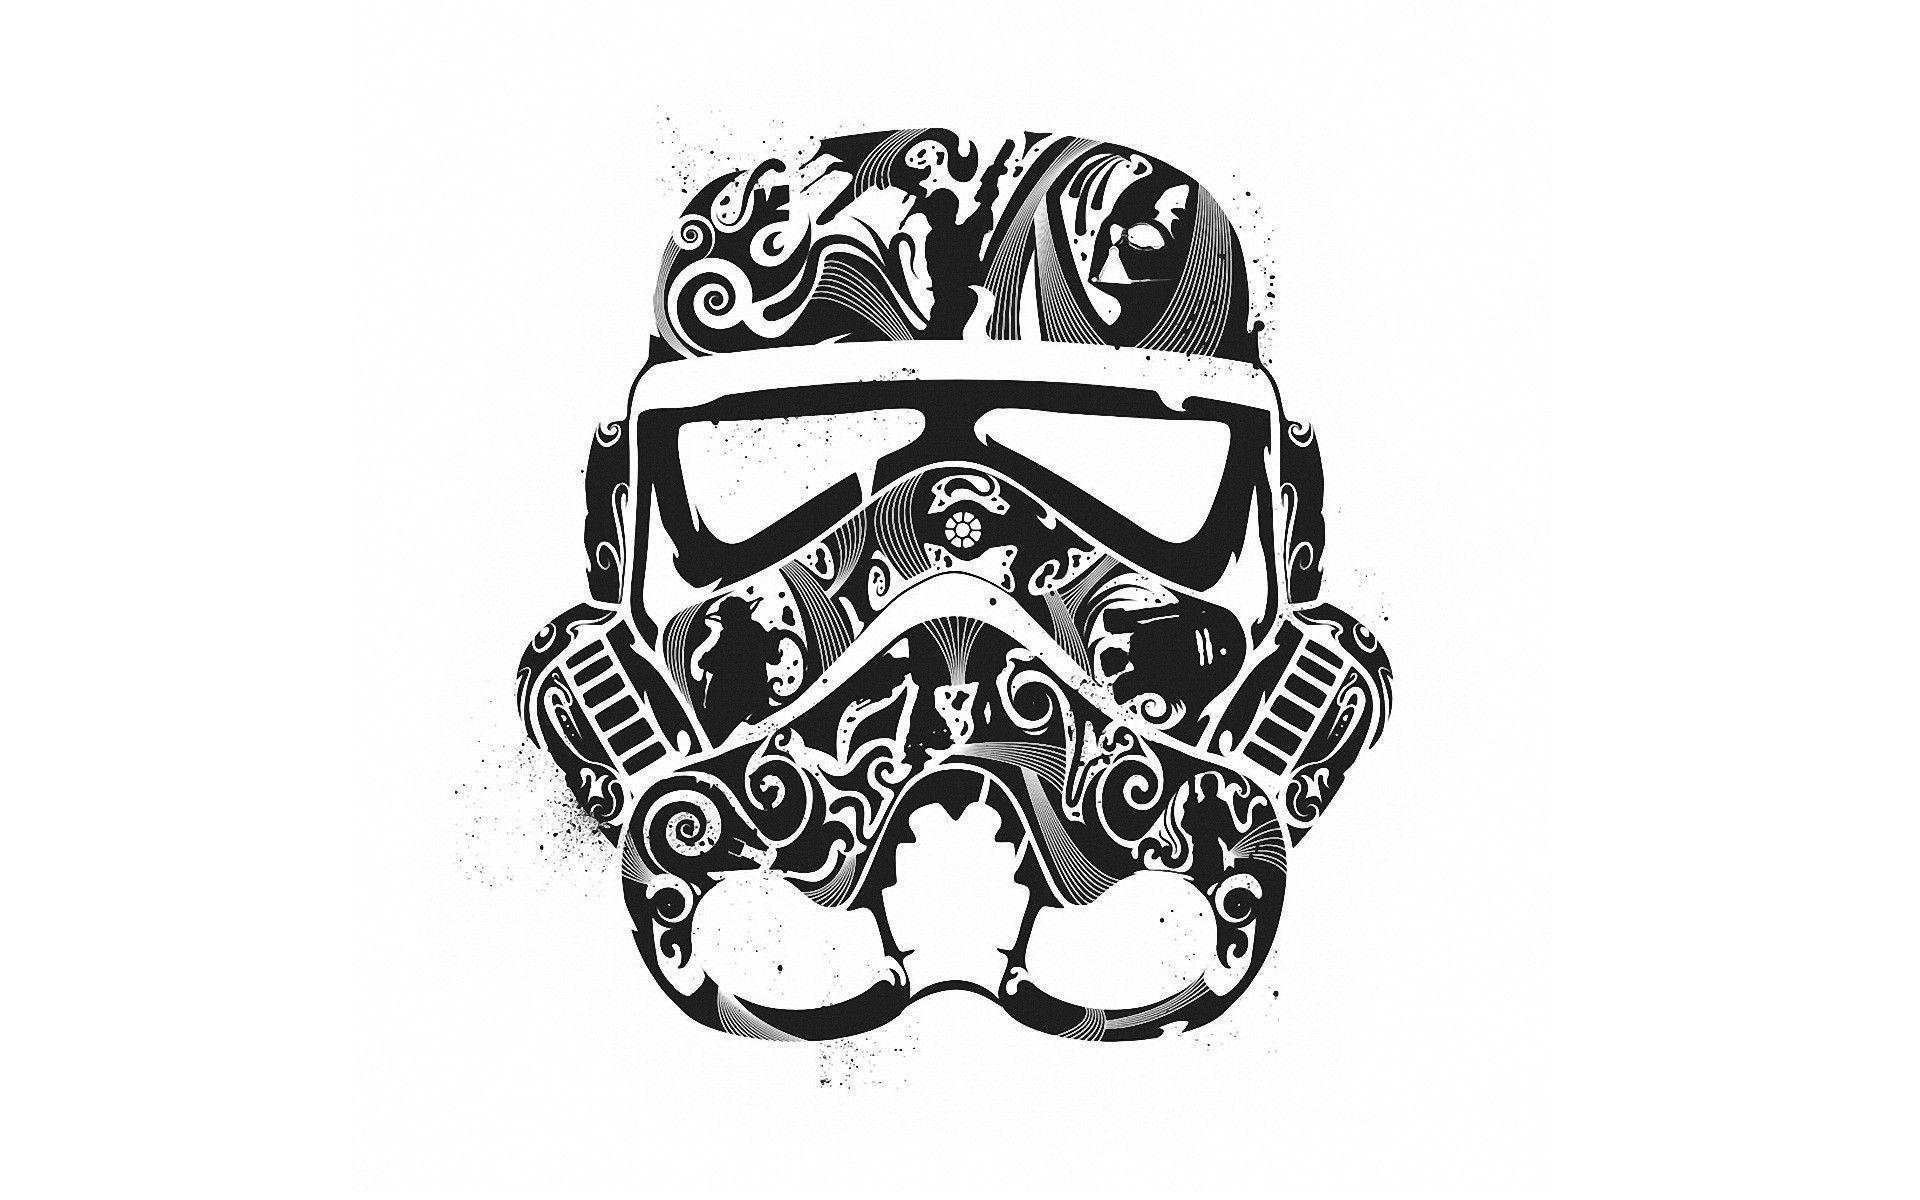 Star Wars stormtroopers boss wallpaperx1600